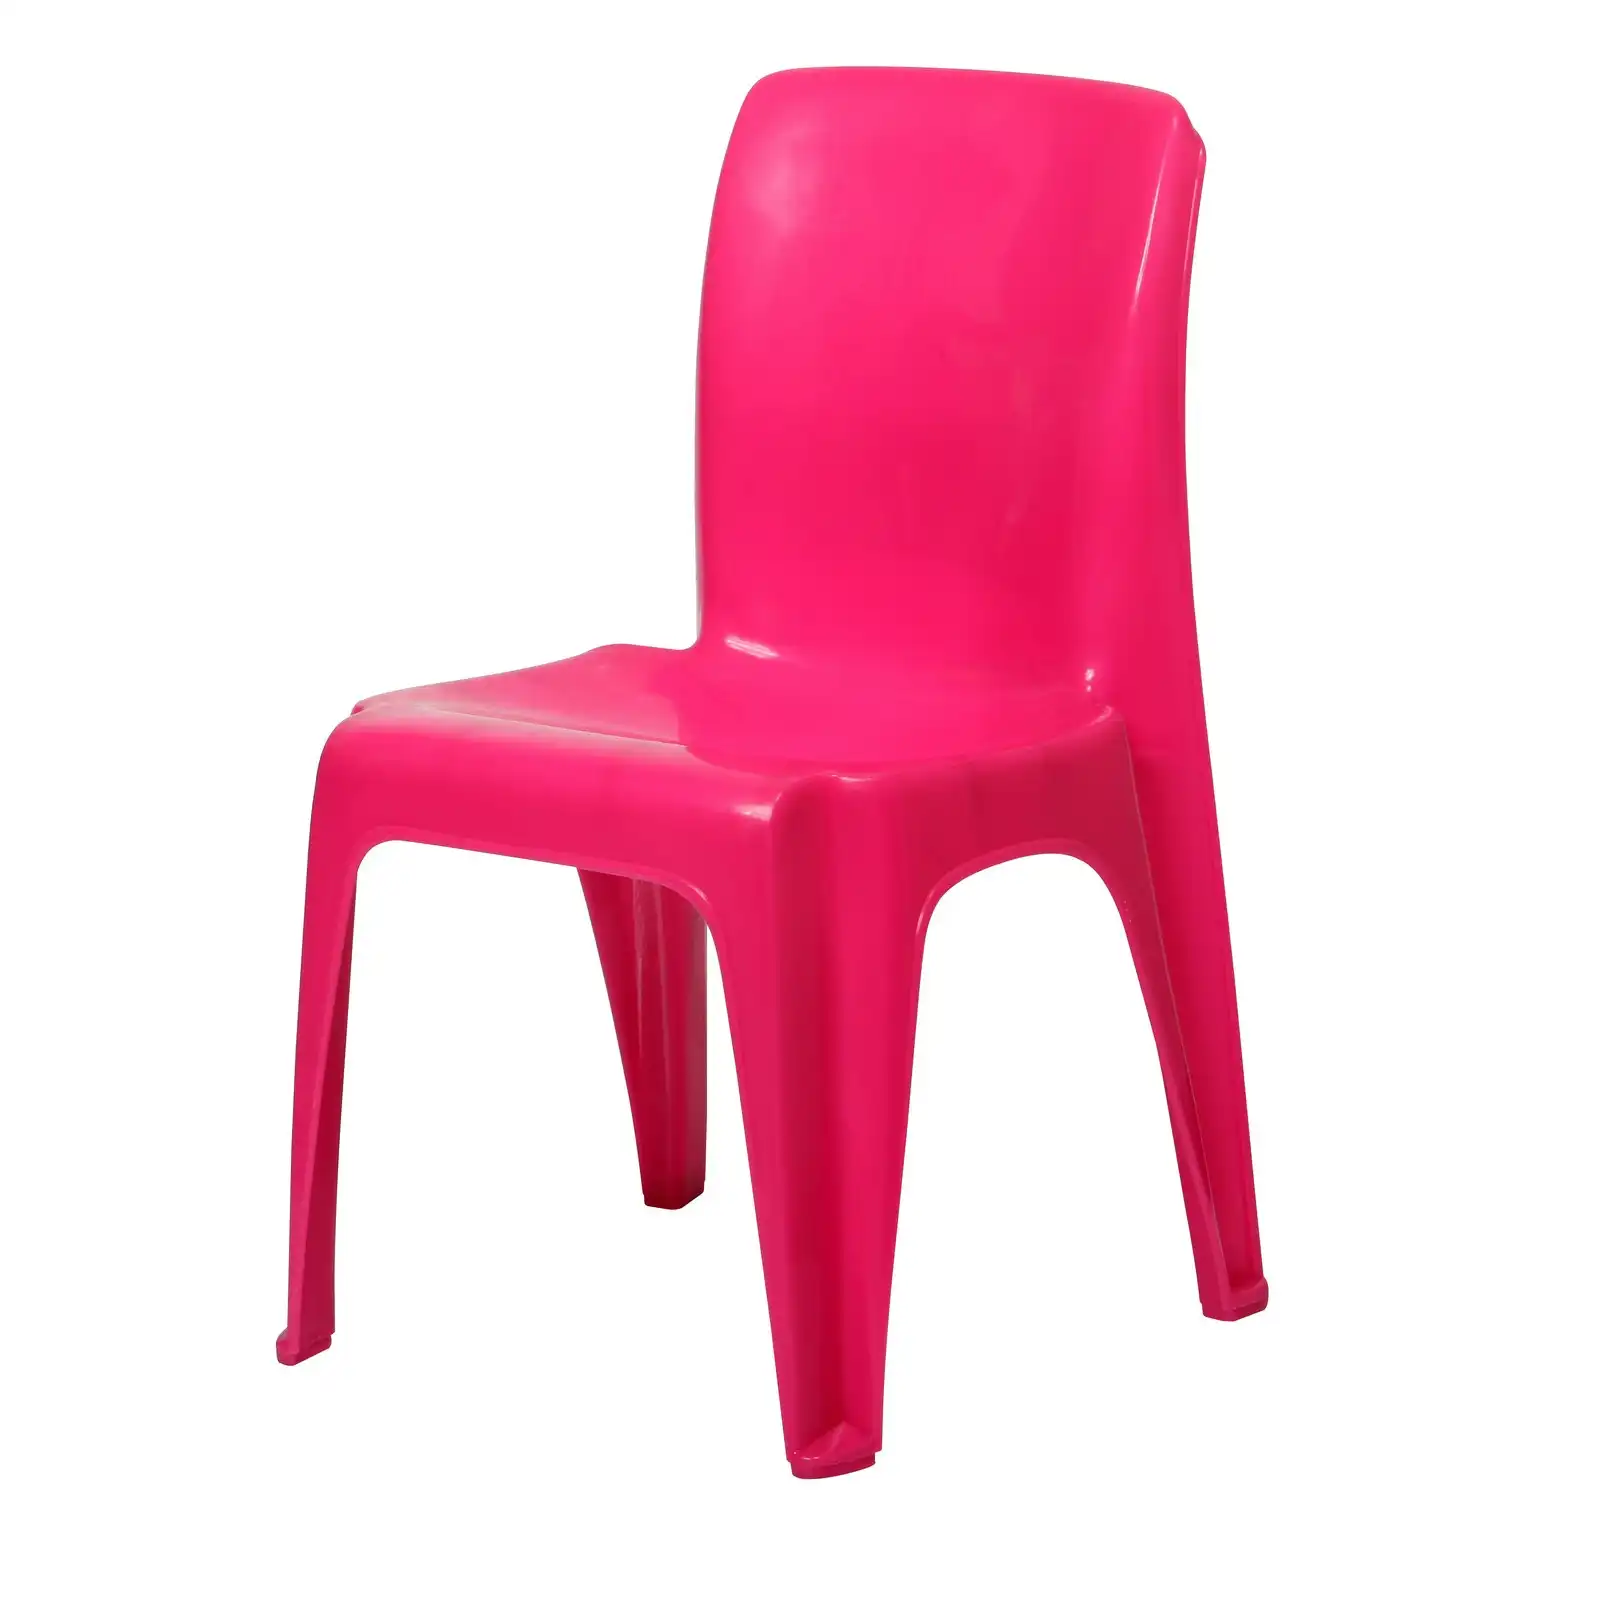 2x Tuff Play 53cm Tinker Chair Kids Plastic Furniture Indoor/Outdoor 2-6y Pink